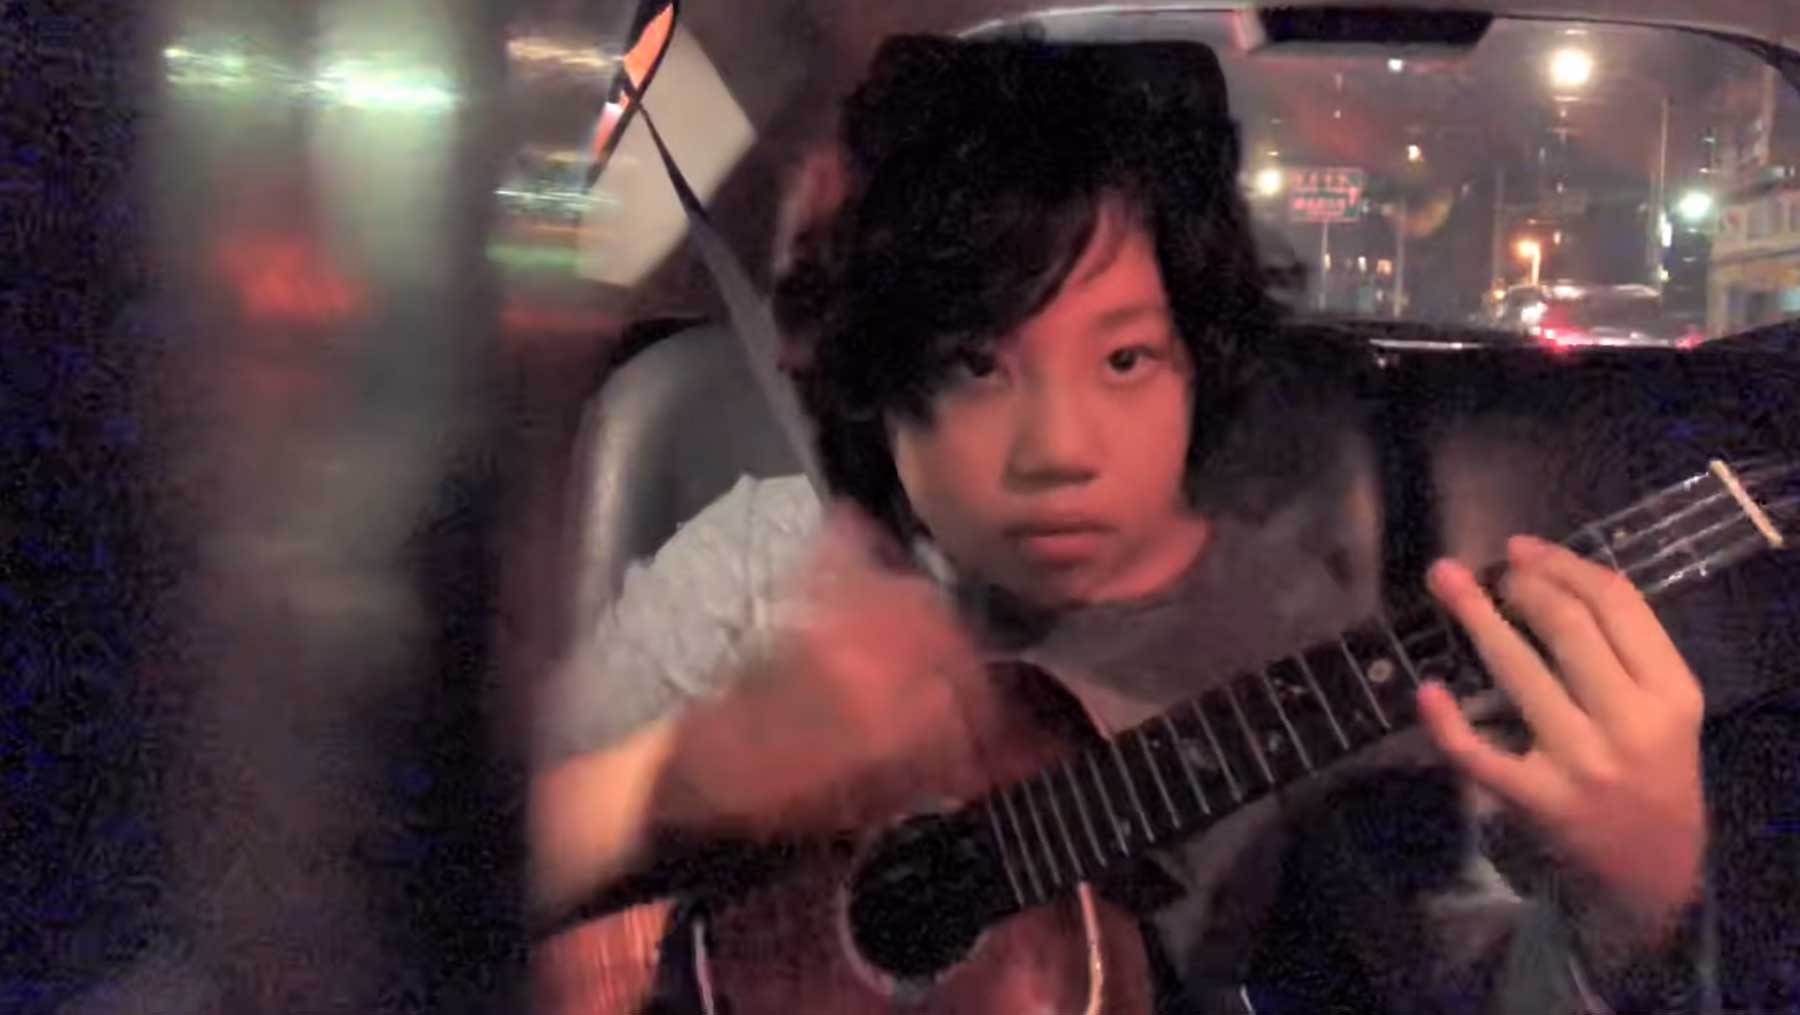 Kind killt "Smooth Criminal" auf der Ukulele feng-e-smooth-criminal-cover-michael-jackson-ukulele 